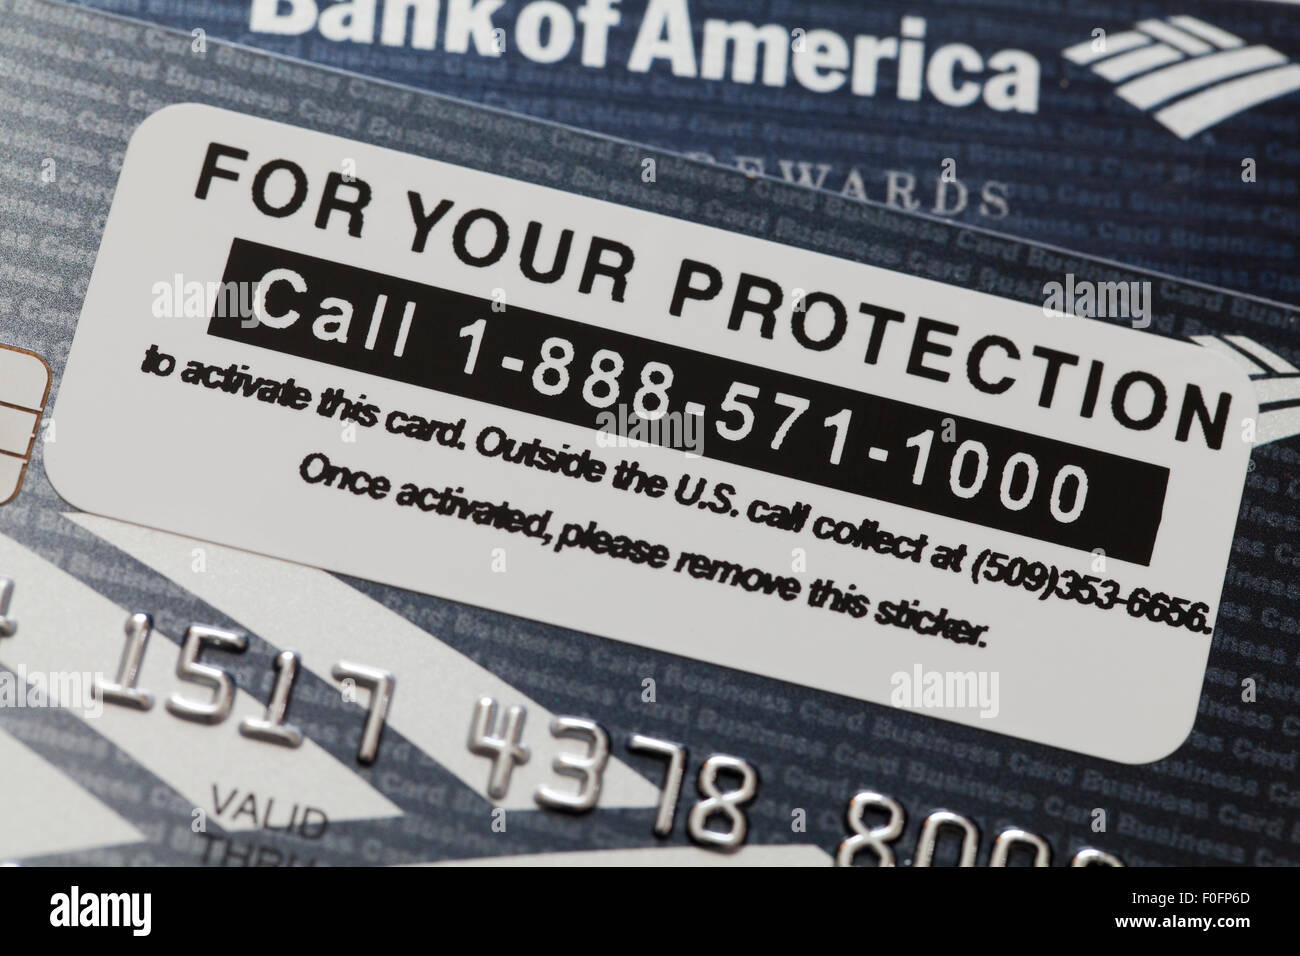 Bank of America Kreditkarte Aktivierung Telefonnummer - USA Stockfoto